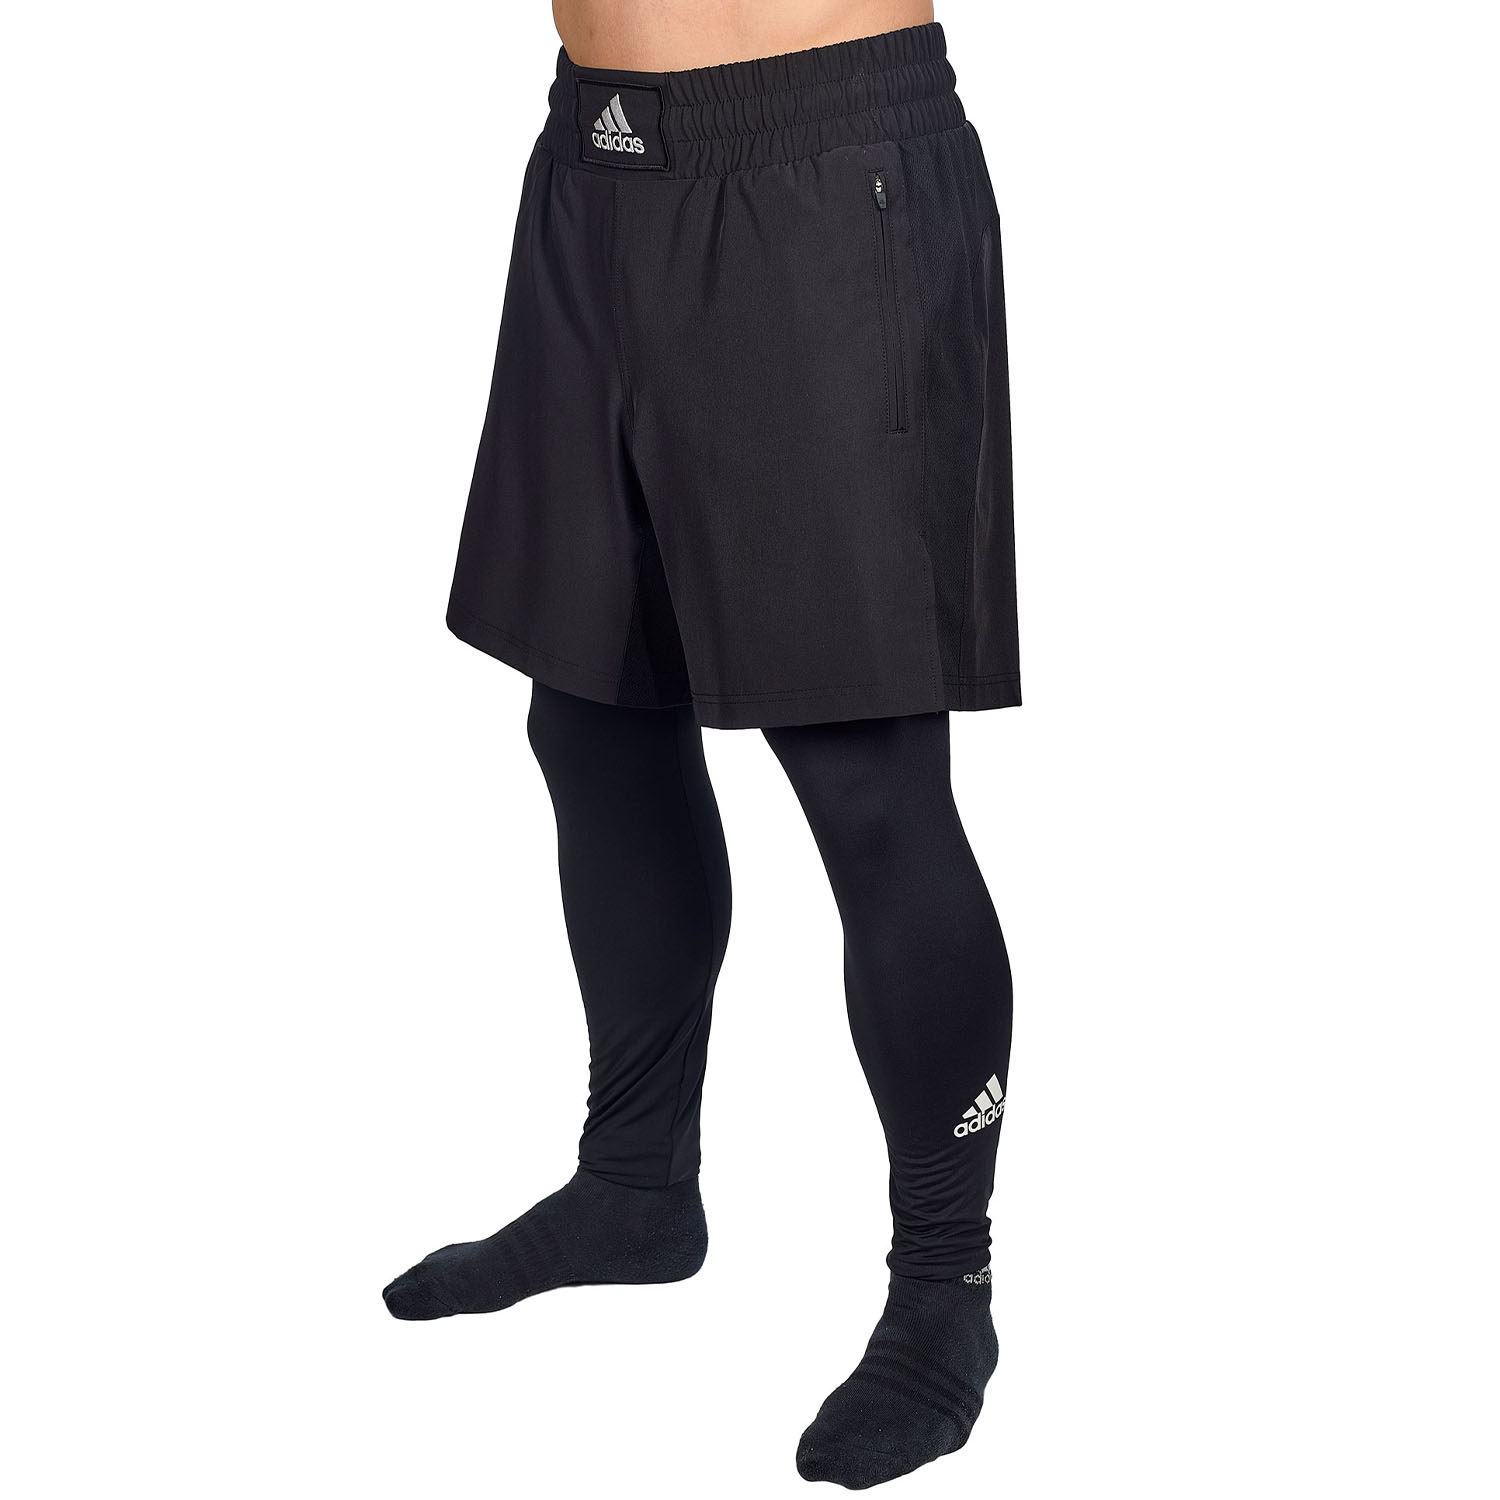 adidas Fitness Shorts, Spats Boxwear Tech, black-white, XL